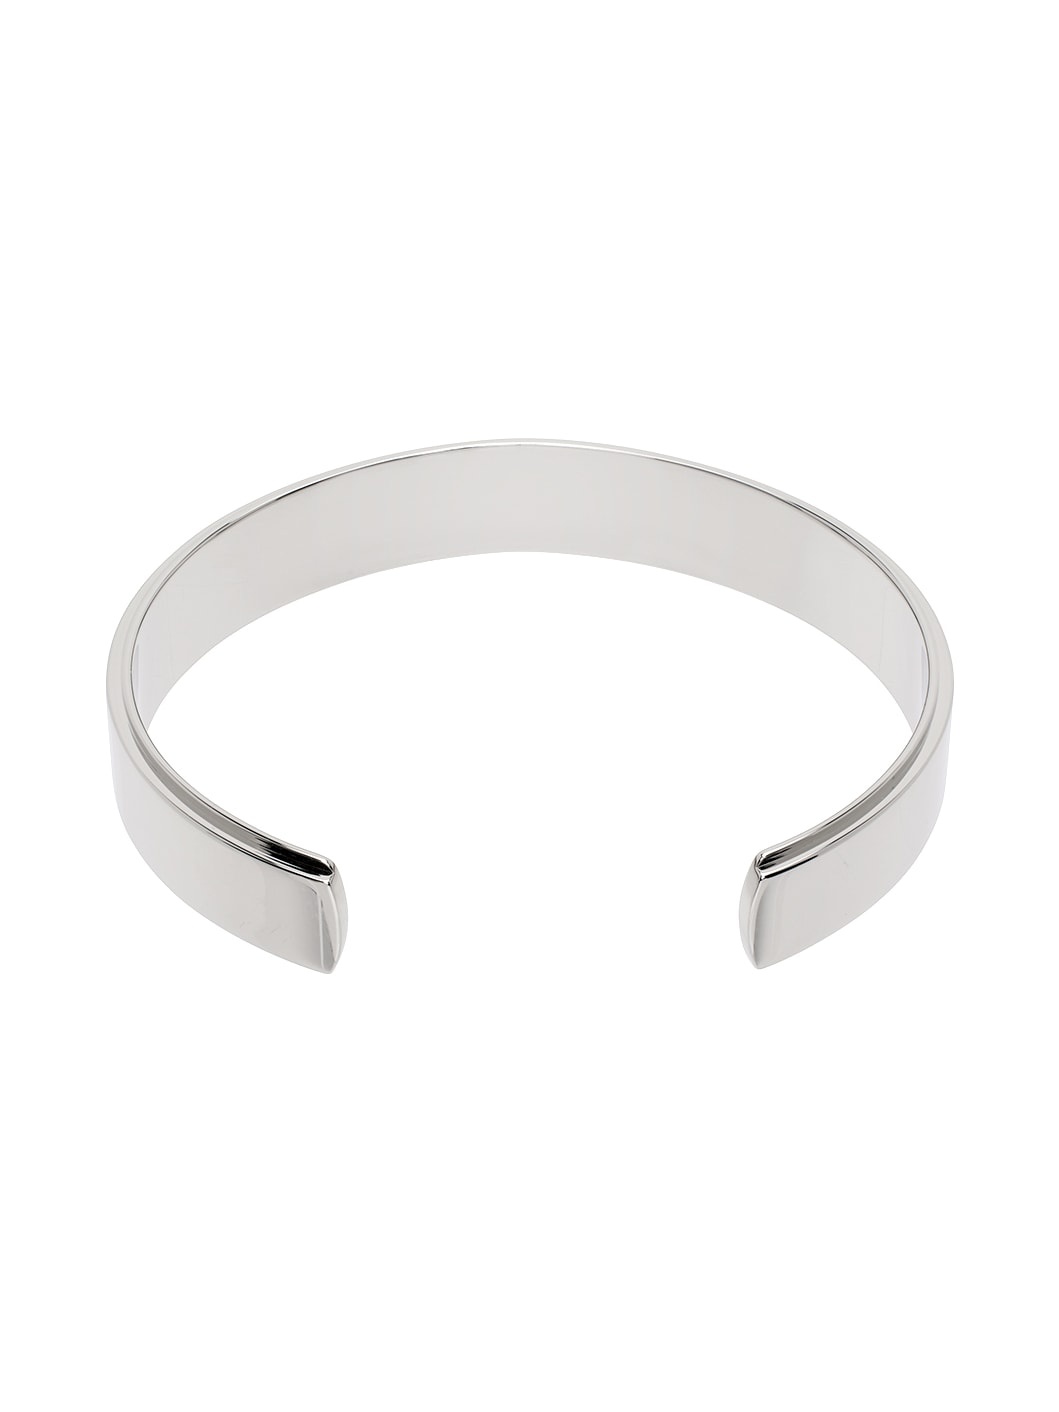 Silver & Black VLogo Signature Cuff Bracelet - 2